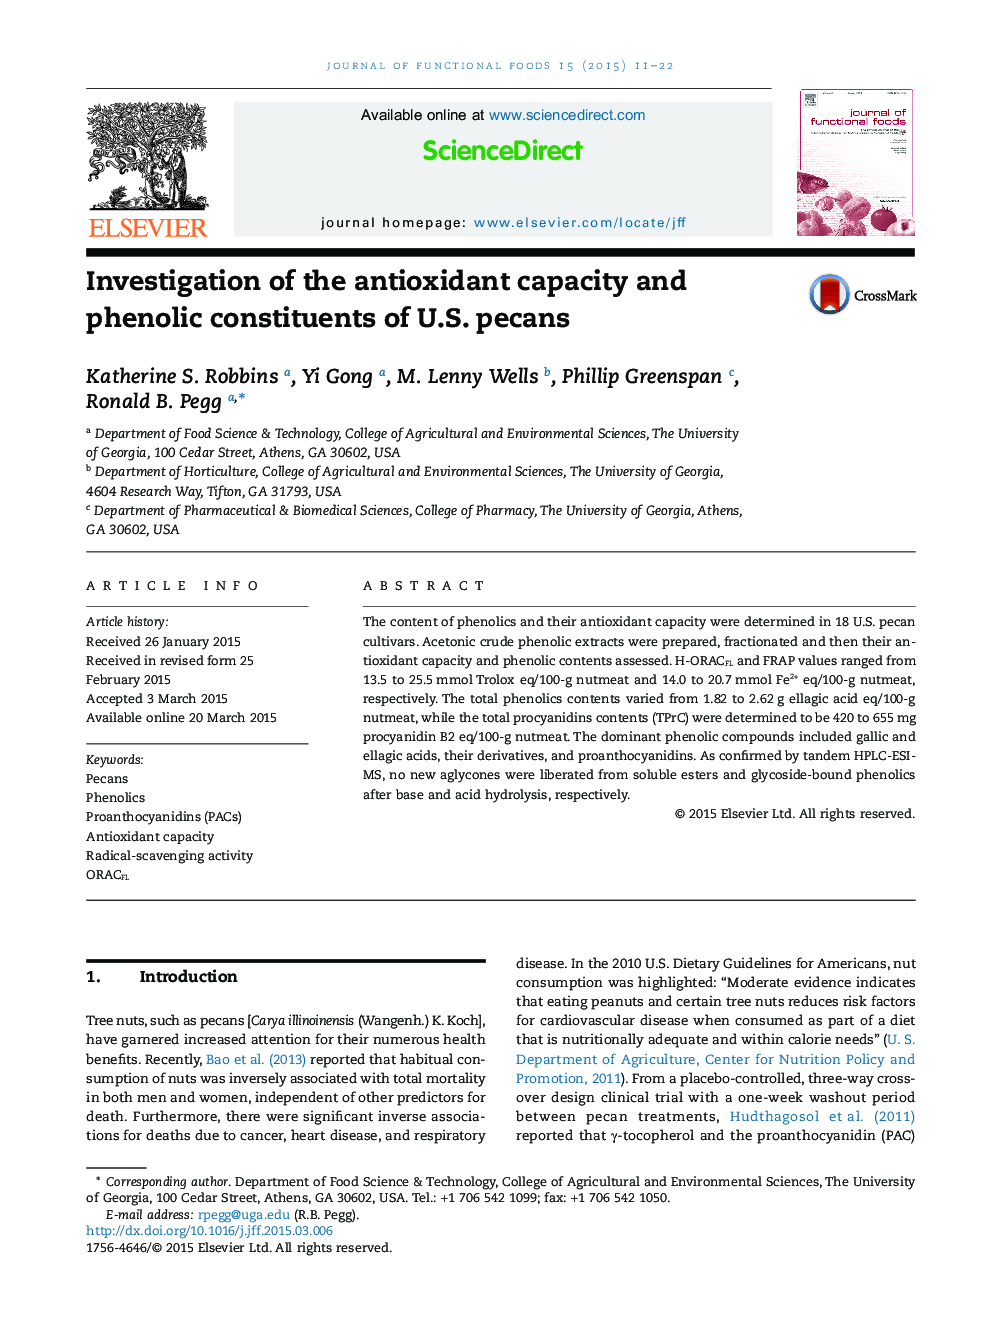 Investigation of the antioxidant capacity and phenolic constituents of U.S. pecans